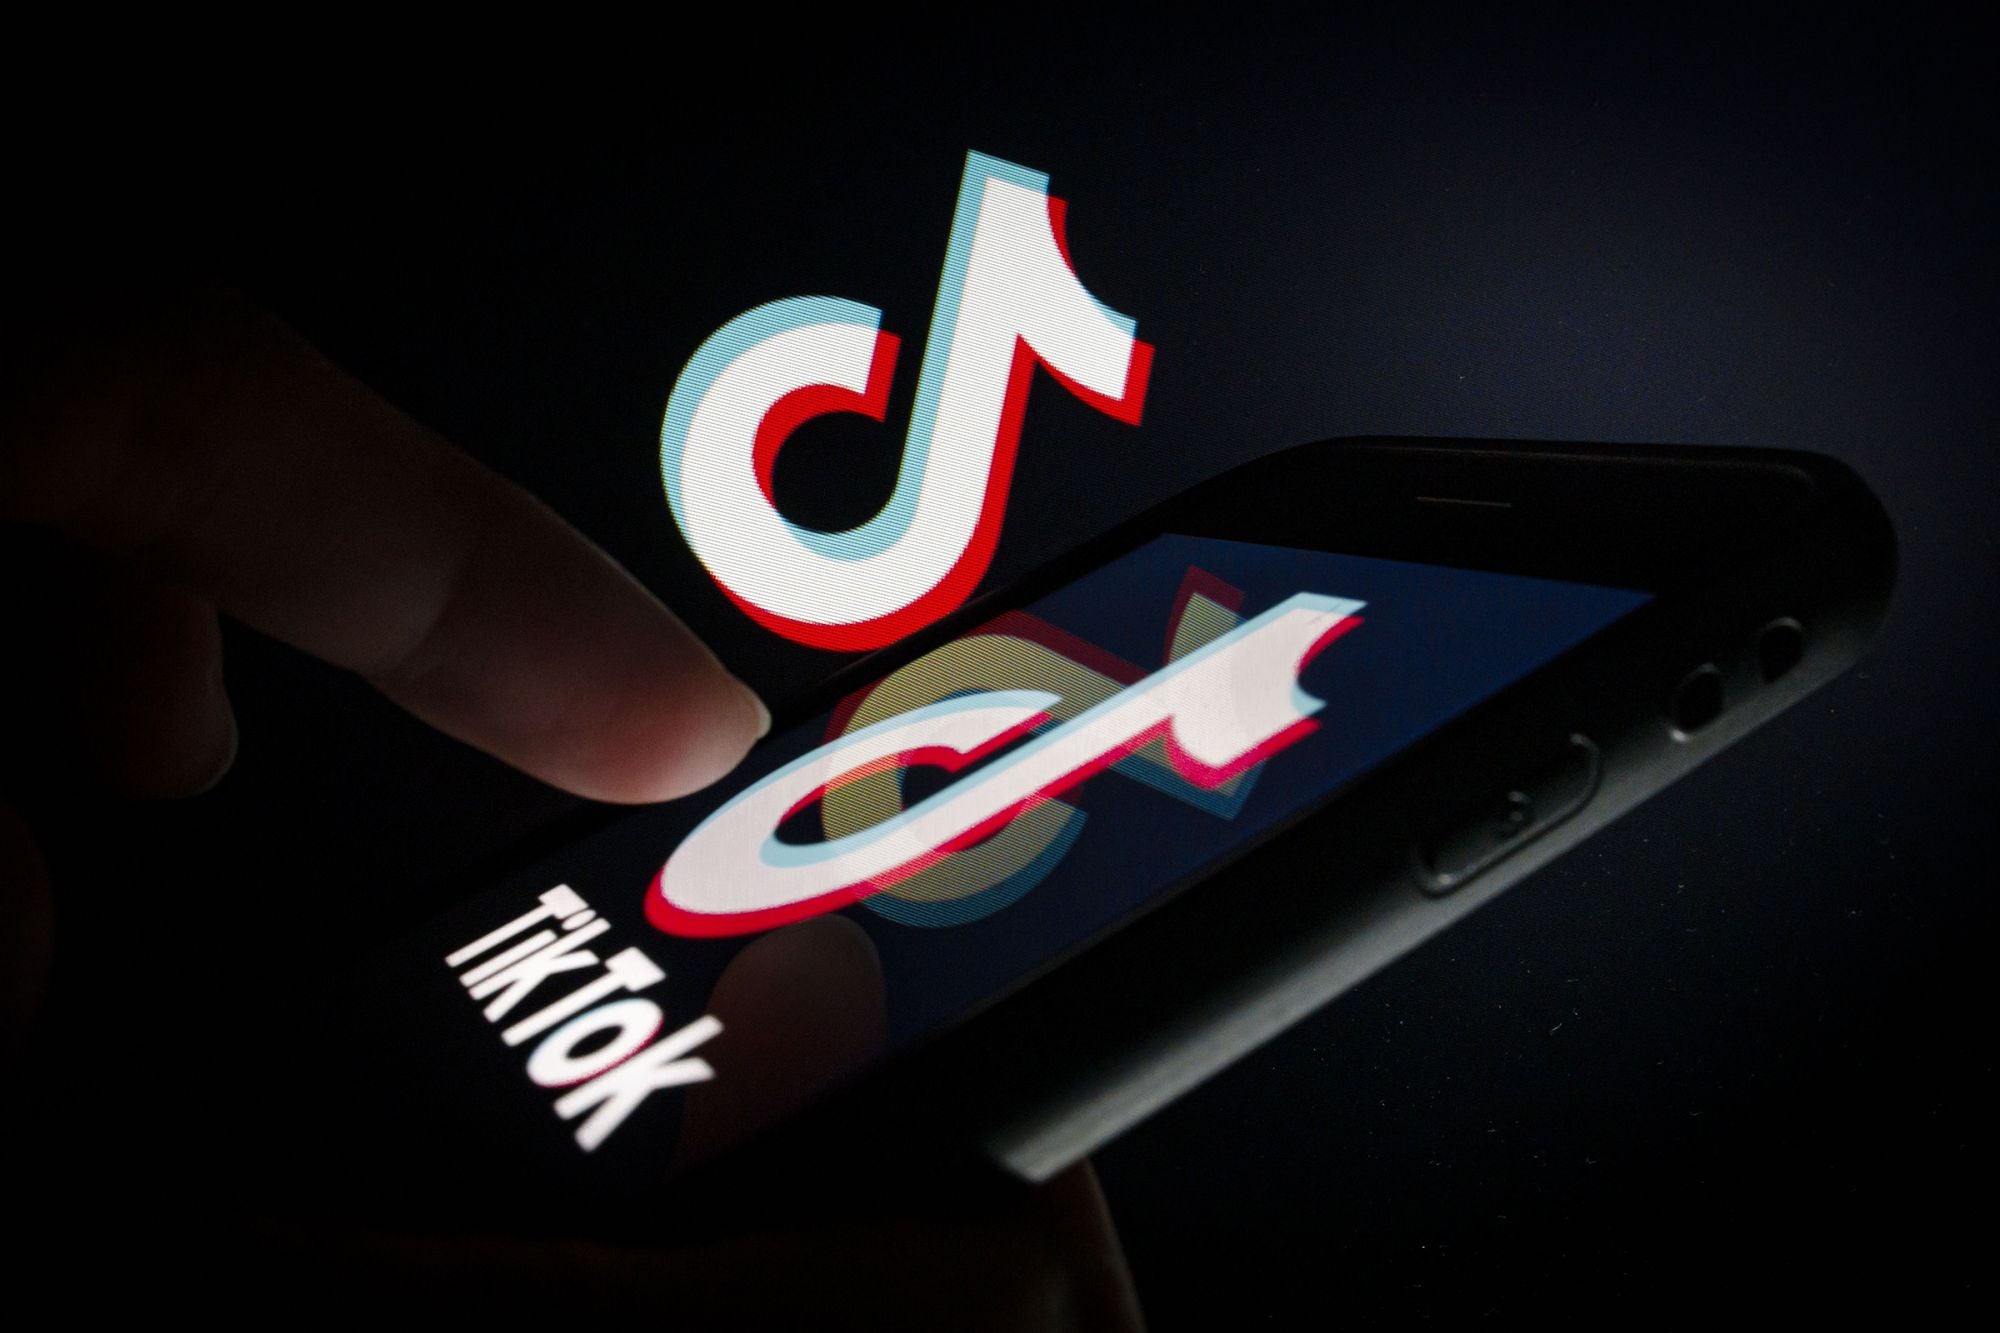 Логотип ТикТок в телефоне светится в темноте и на него направлен палец